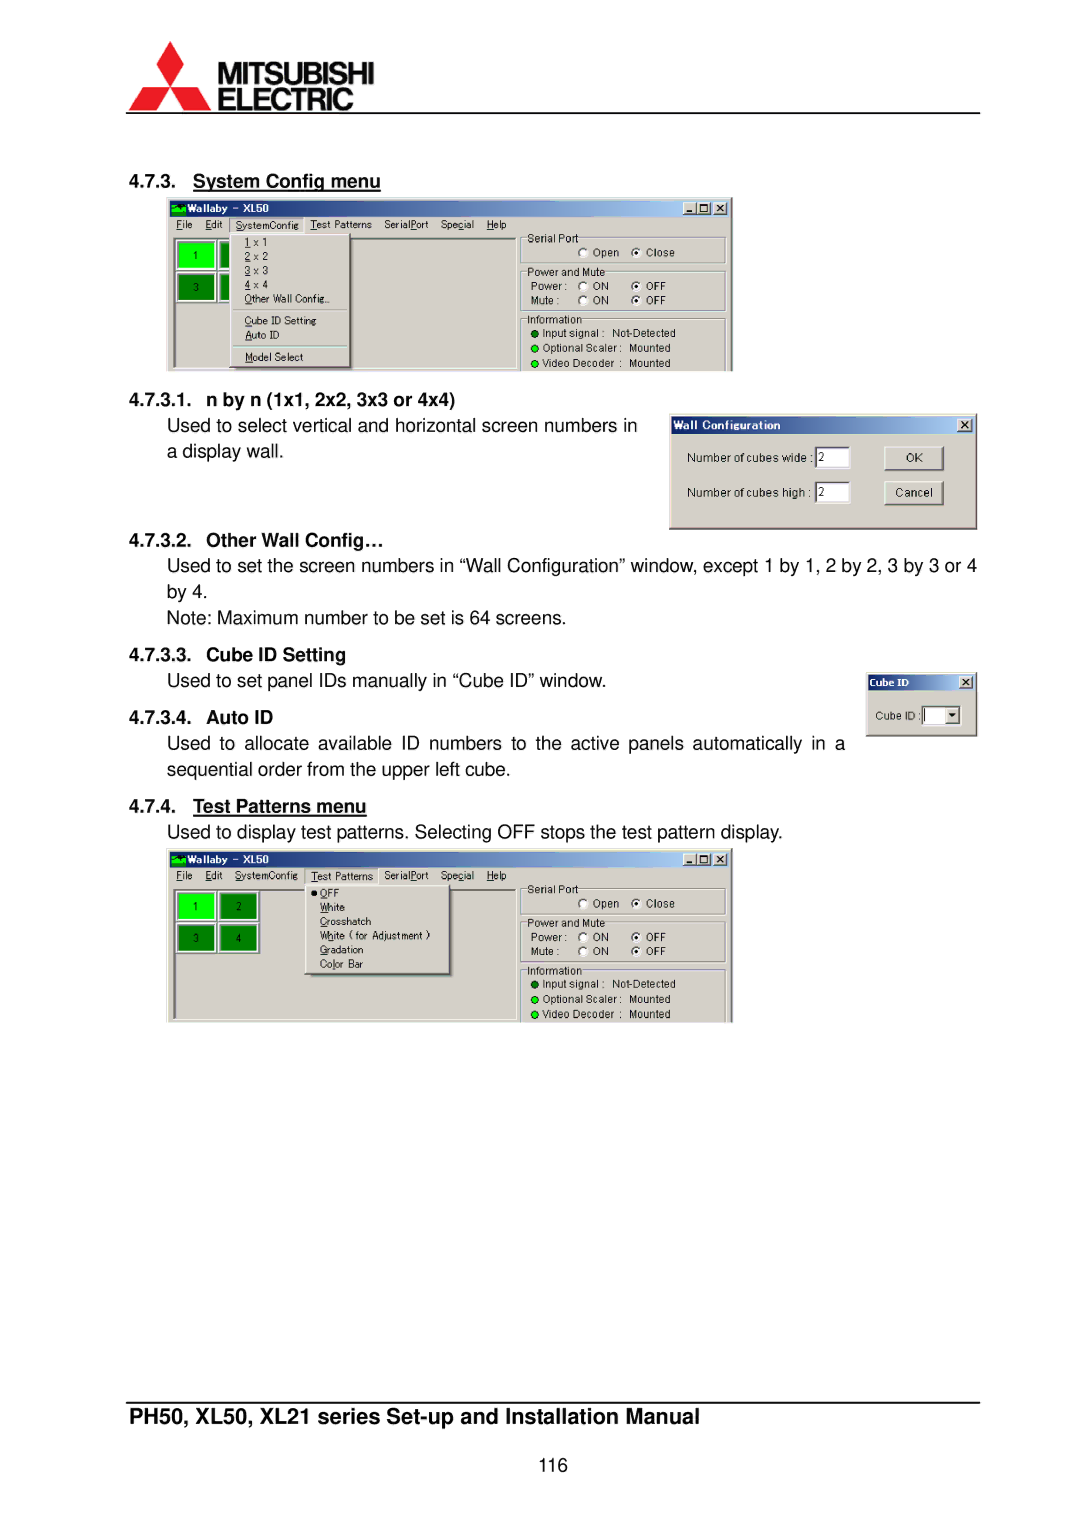 Mitsubishi Electronics XL50, XL21 System Config menu By n 1x1, 2x2, 3x3 or, Other Wall Config…, Cube ID Setting, Auto ID 